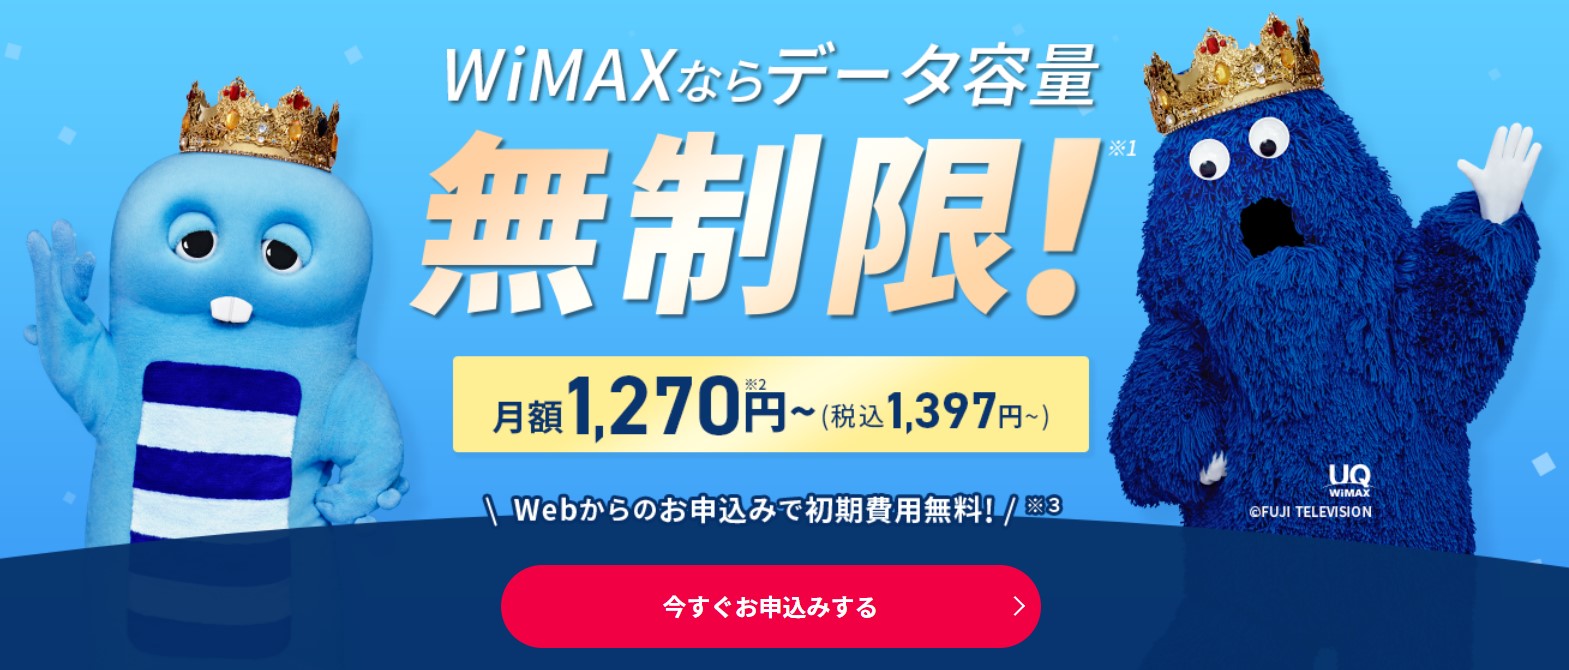 【Broad WiMAX